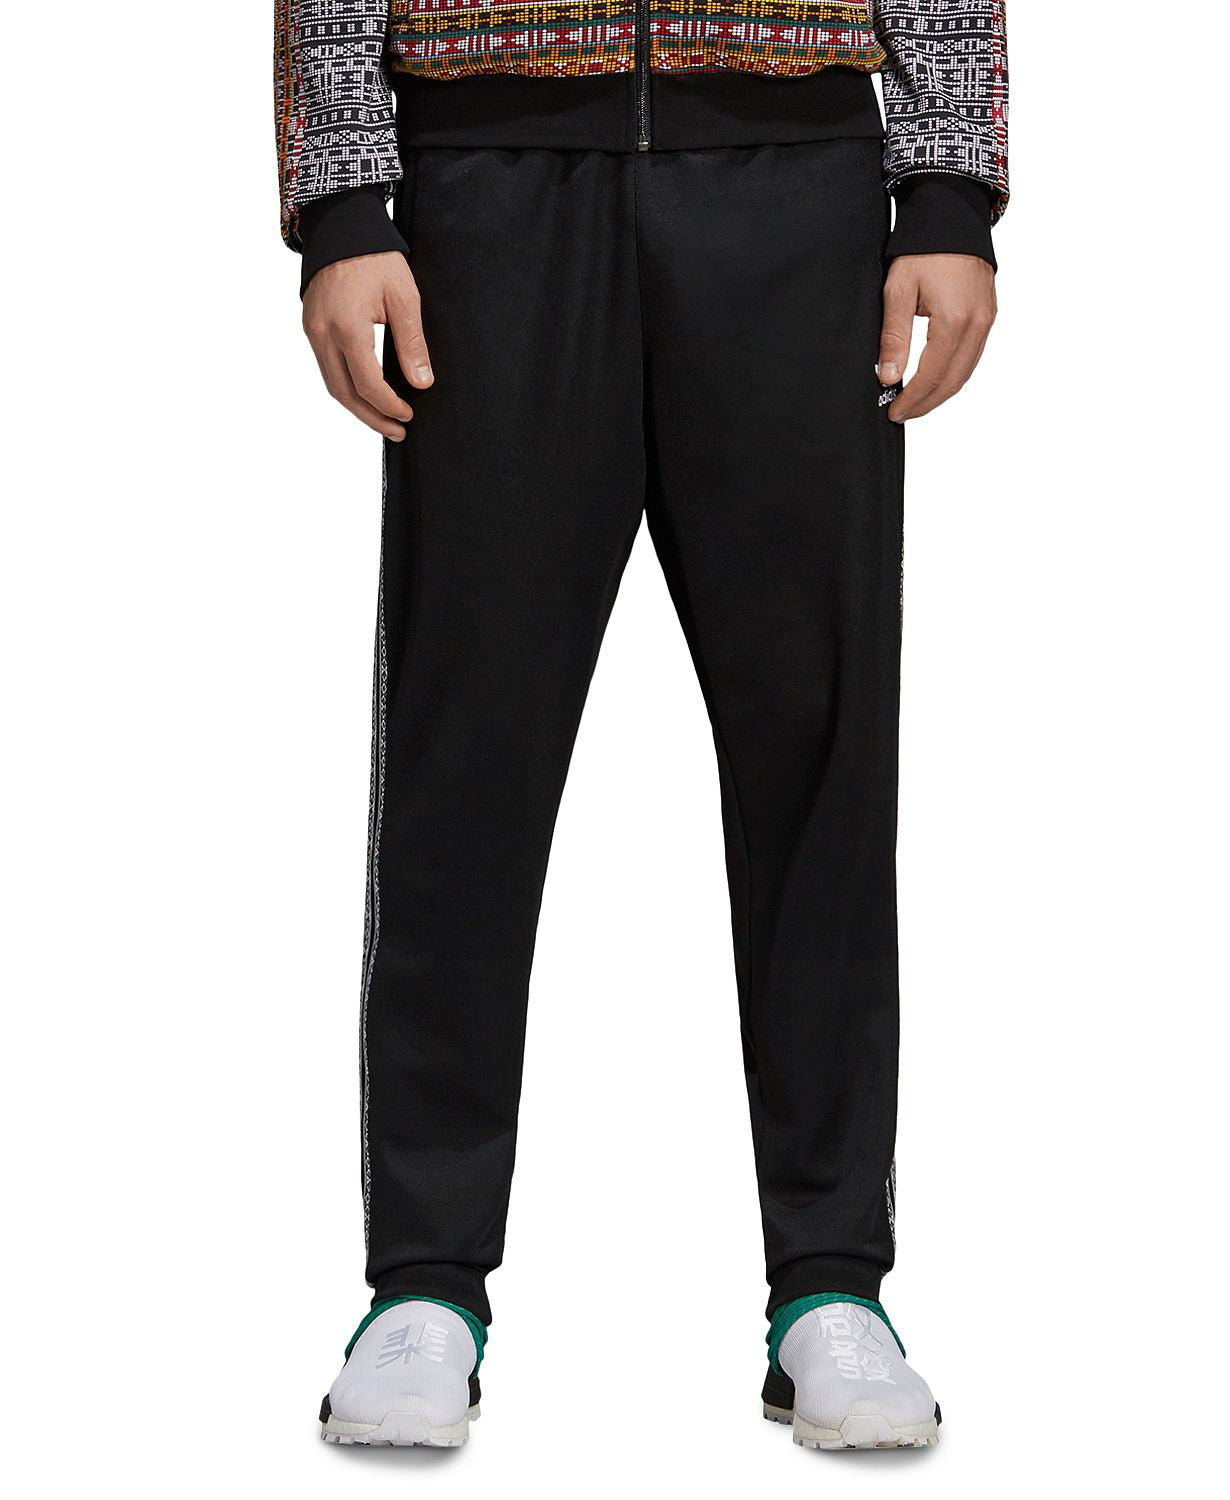 Adidas Originals X Pharrell Williams Solar Track Pants Black